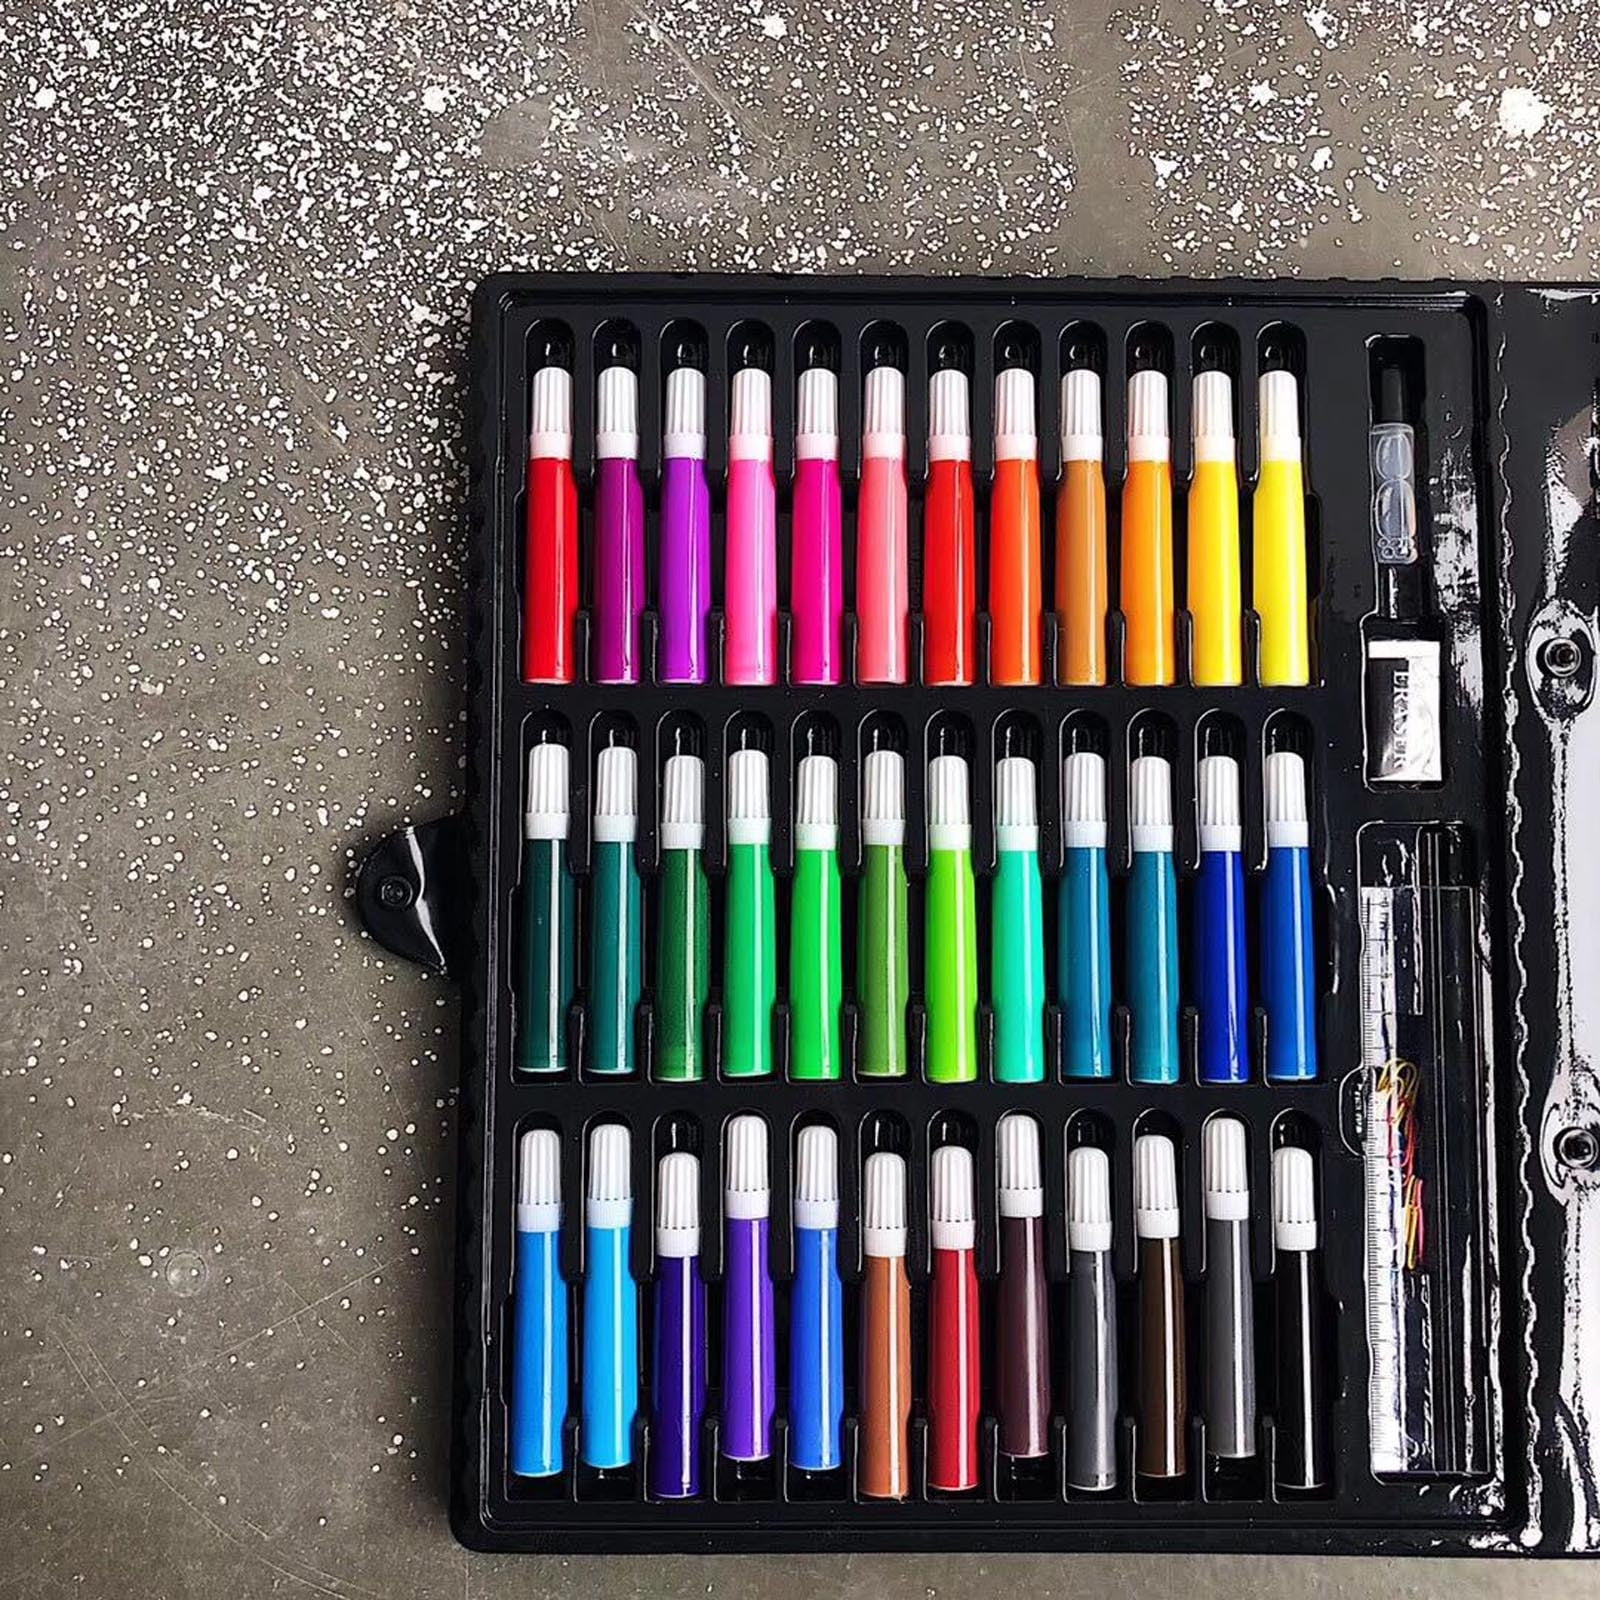 Aianshan Painting Series Pencil Pen Marker Art Supply Case